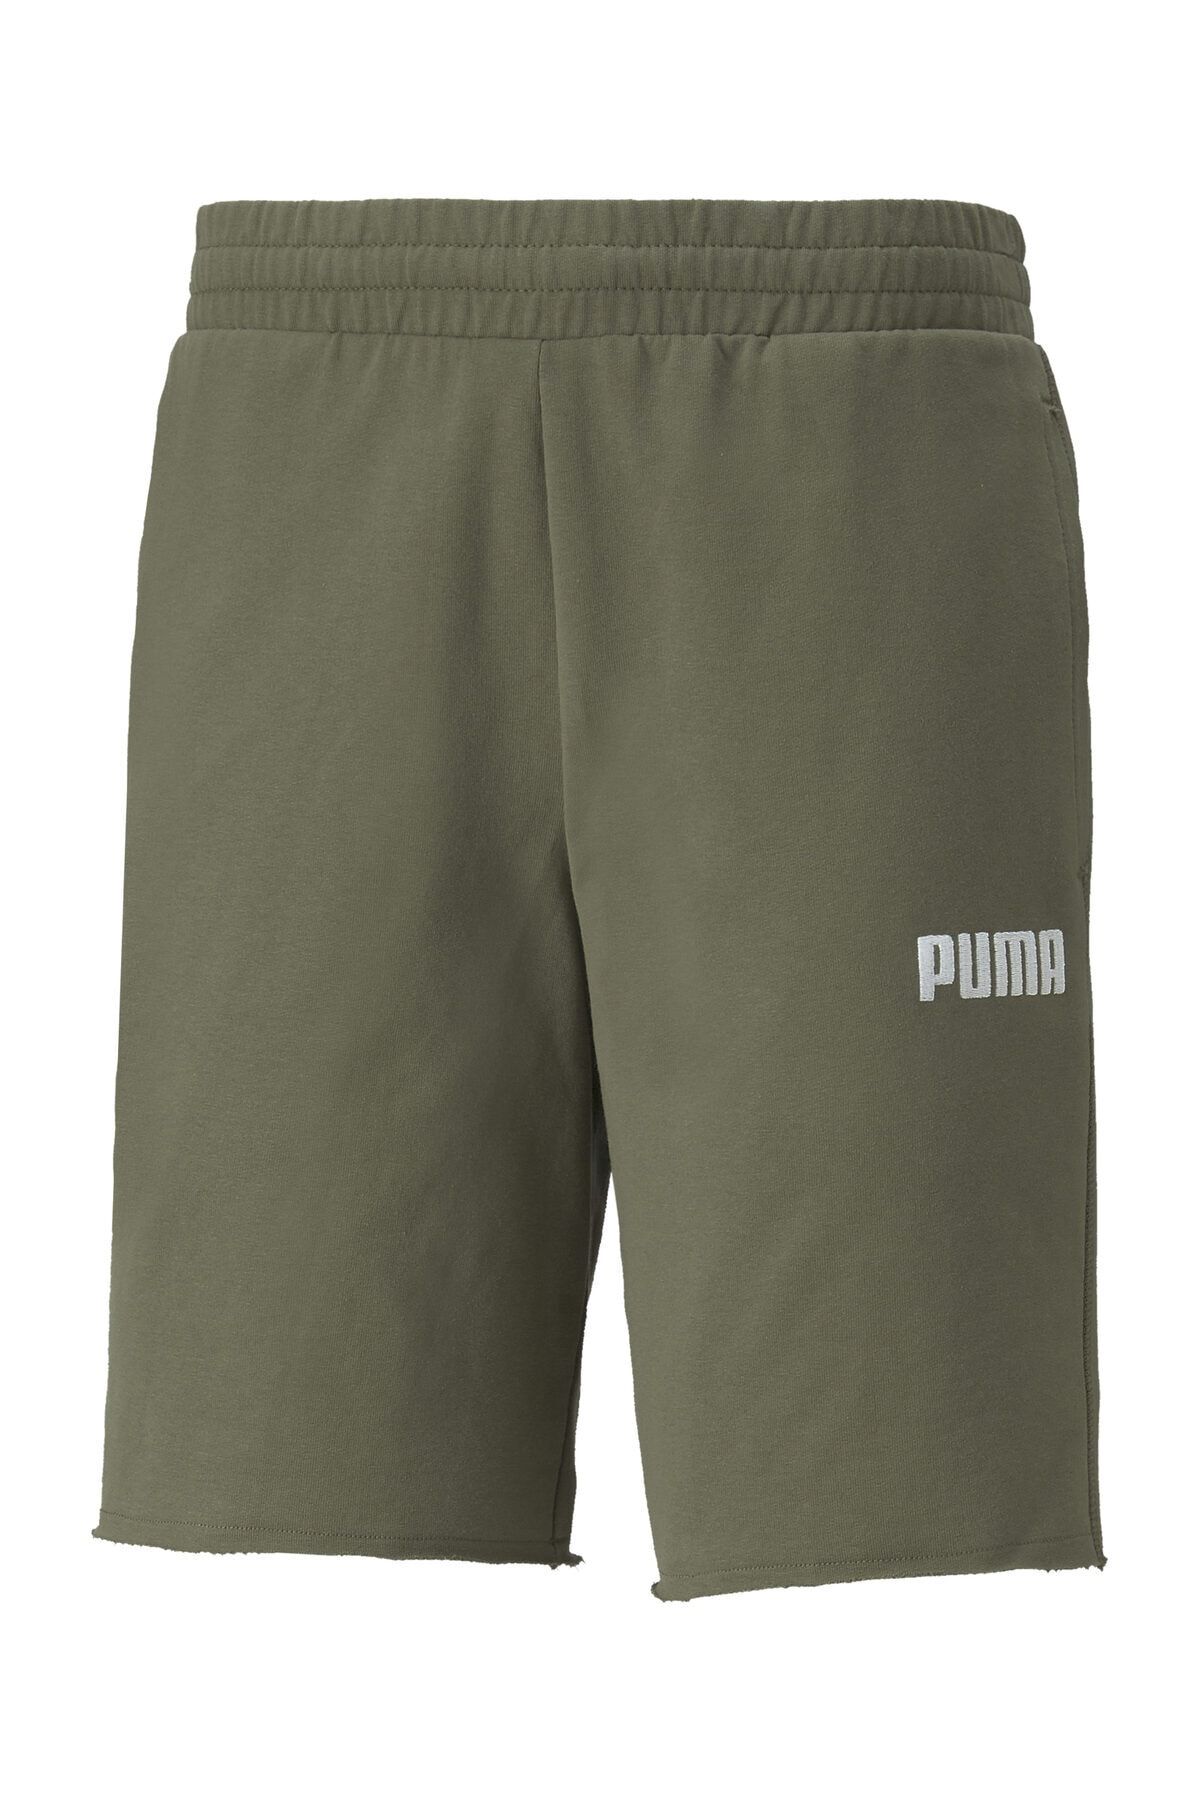 Puma Unisex  Spor Şort - Modern Basics Sweat Shorts 9" TR Dark Gr - 84844532